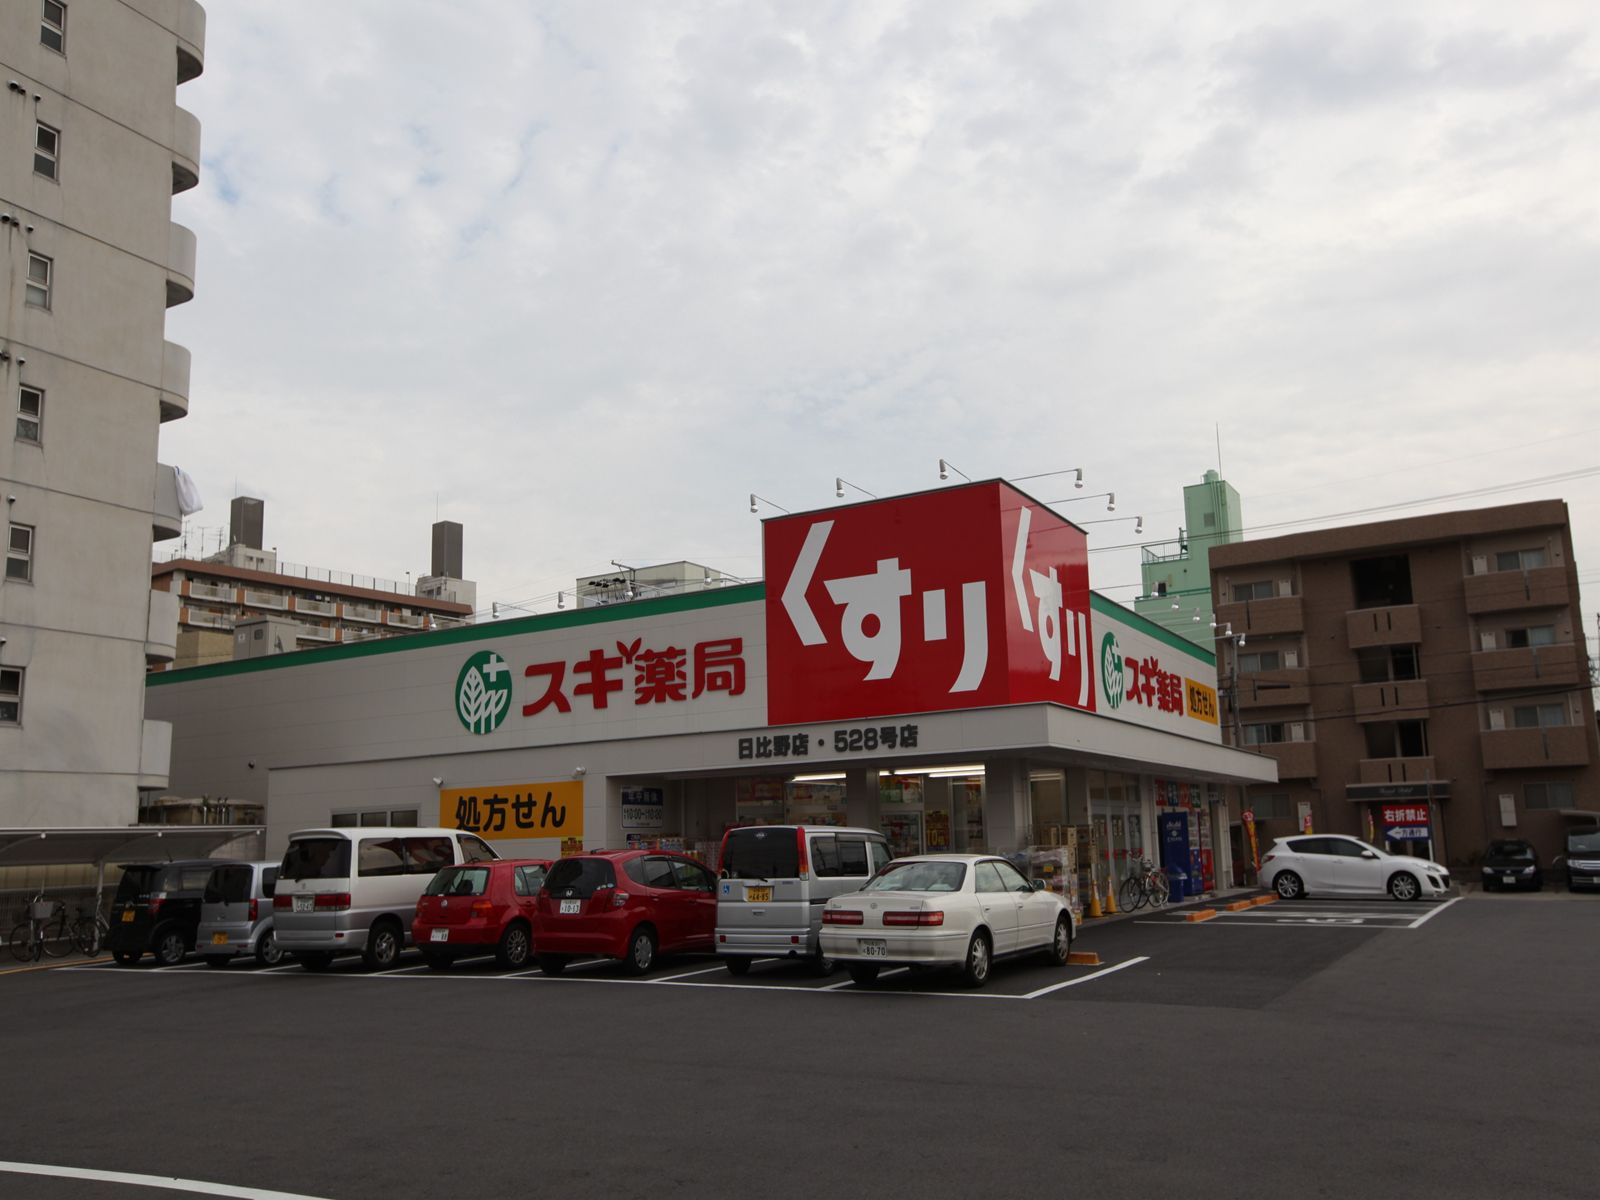 Dorakkusutoa. Cedar pharmacy Hibino shop 320m until (drugstore)